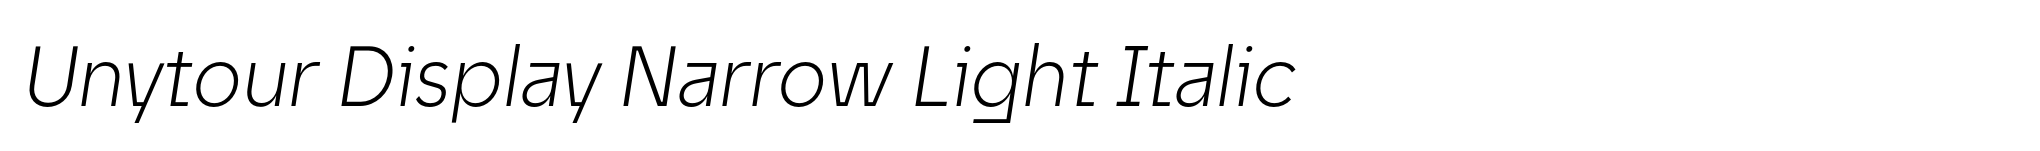 Unytour Display Narrow Light Italic image